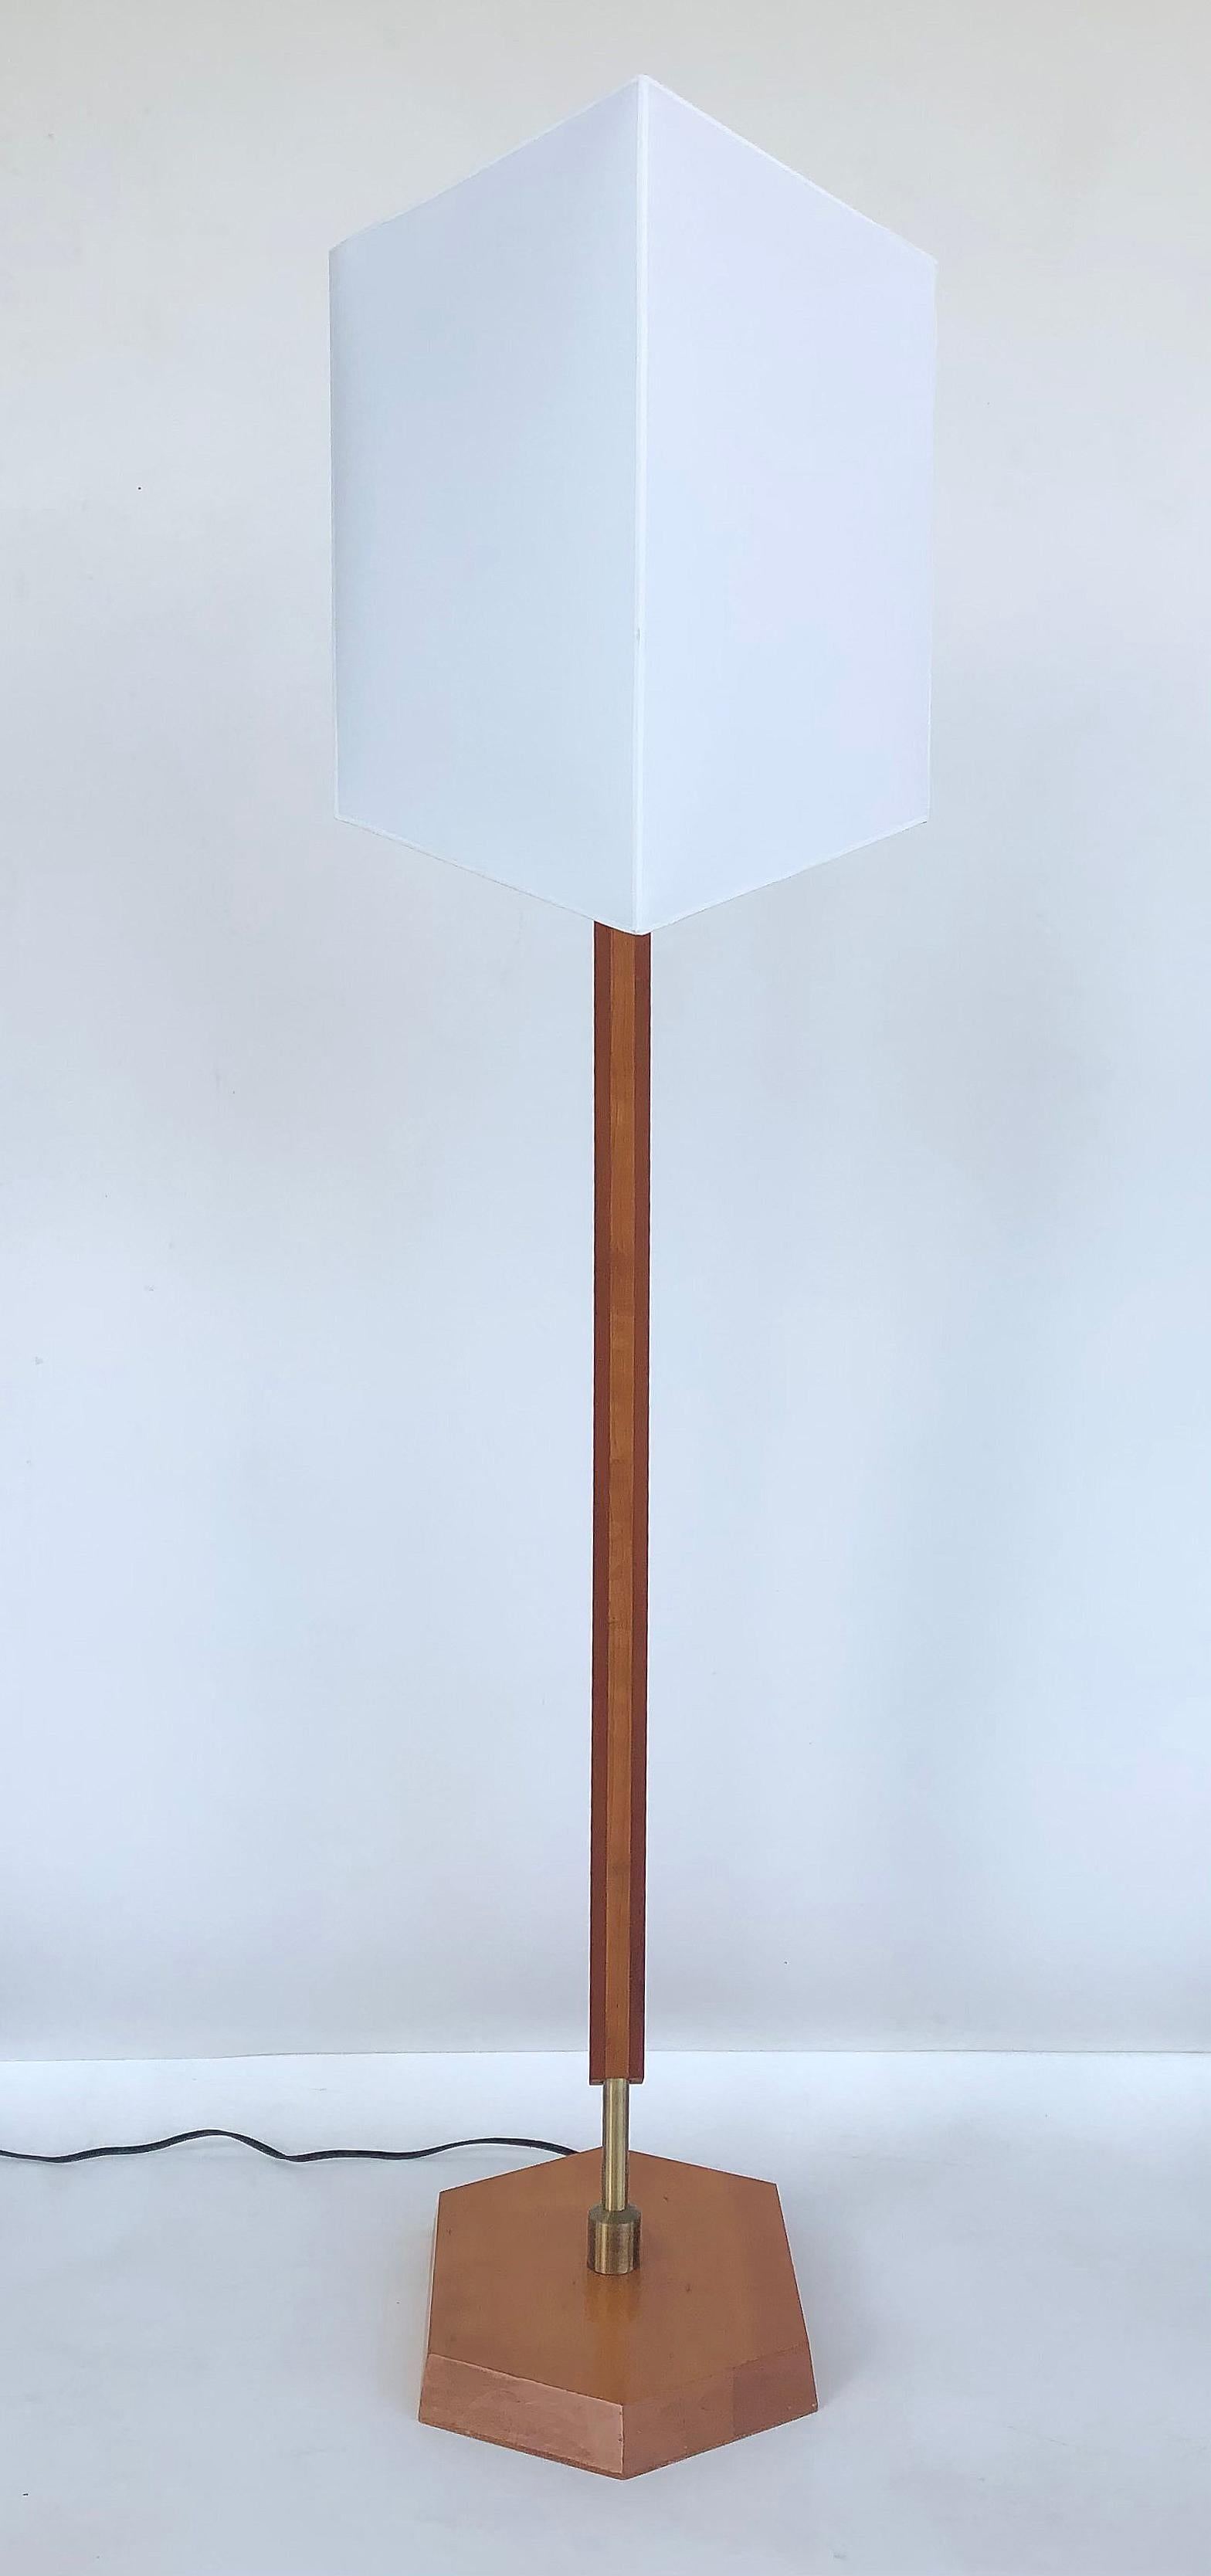 Frank Lloyd Wright Yamagiwa Taliesin floor lamp S2530

Offered for sale is a Frank Lloyd Wright Yamagiwa Taliesin S2530 floor lamp with a wooden frame and white fabric shade on a hexagonal base. This rare and authentic Yamagiwa floor lamp for the